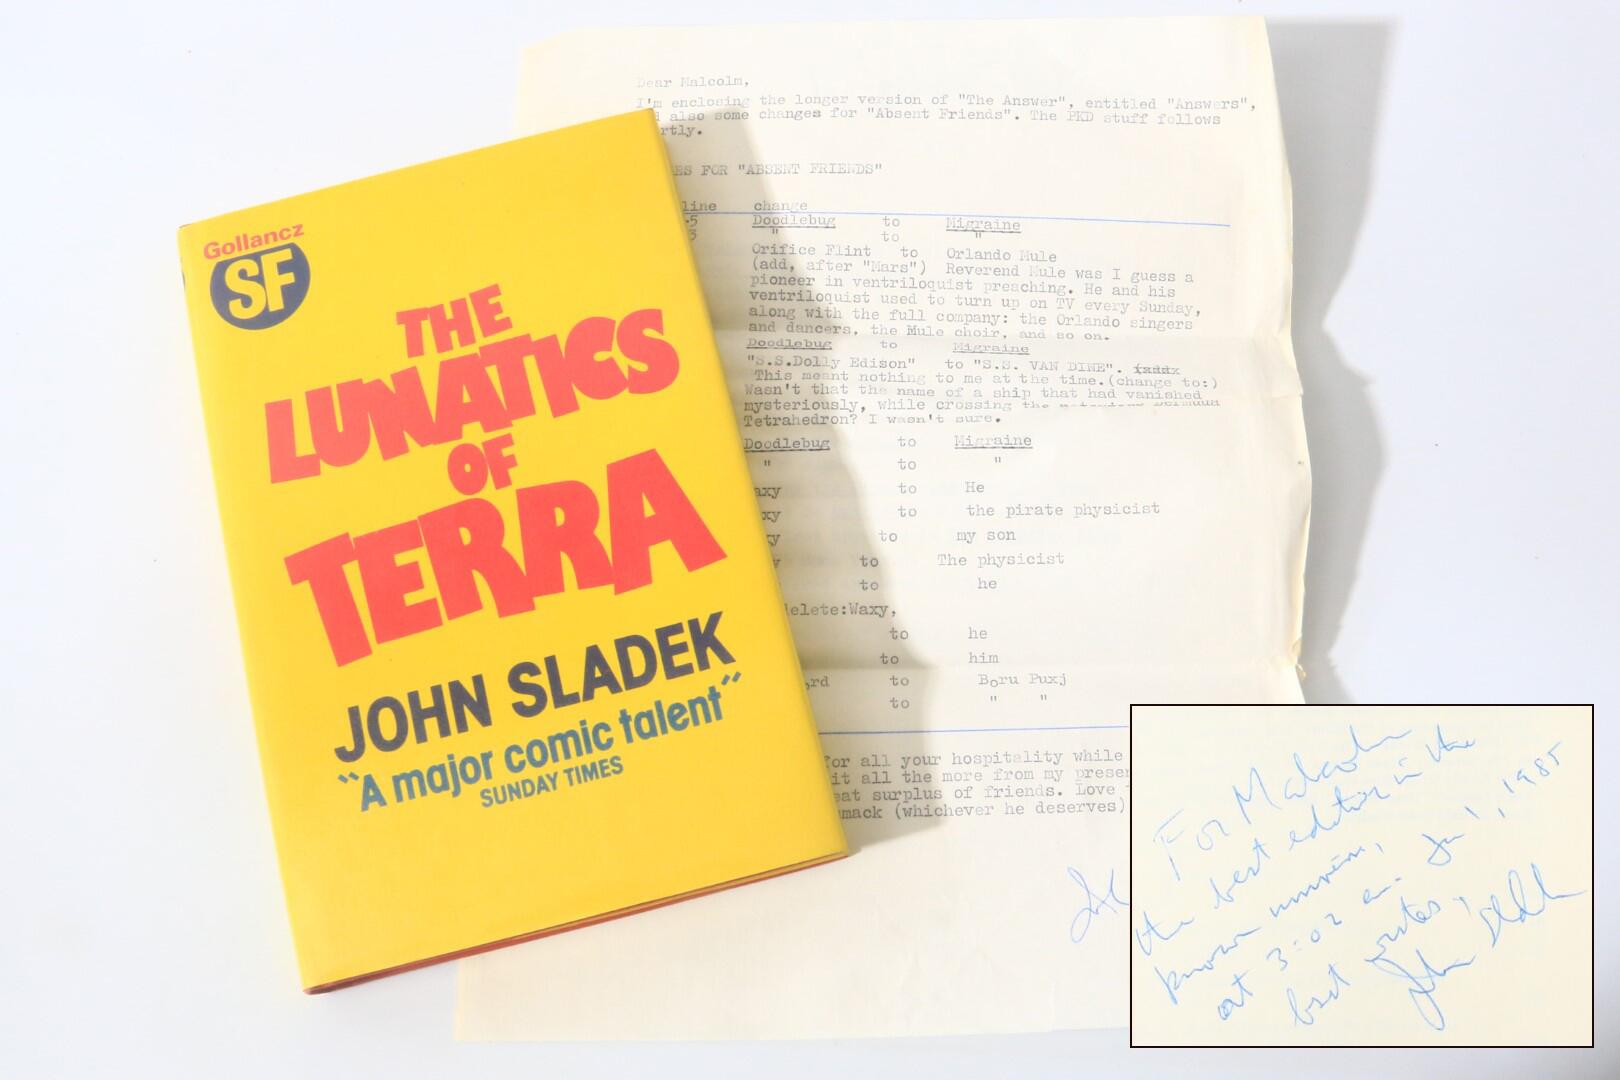 John Sladek - The Lunatics of Terra - Gollancz, 1984, Signed First Edition.